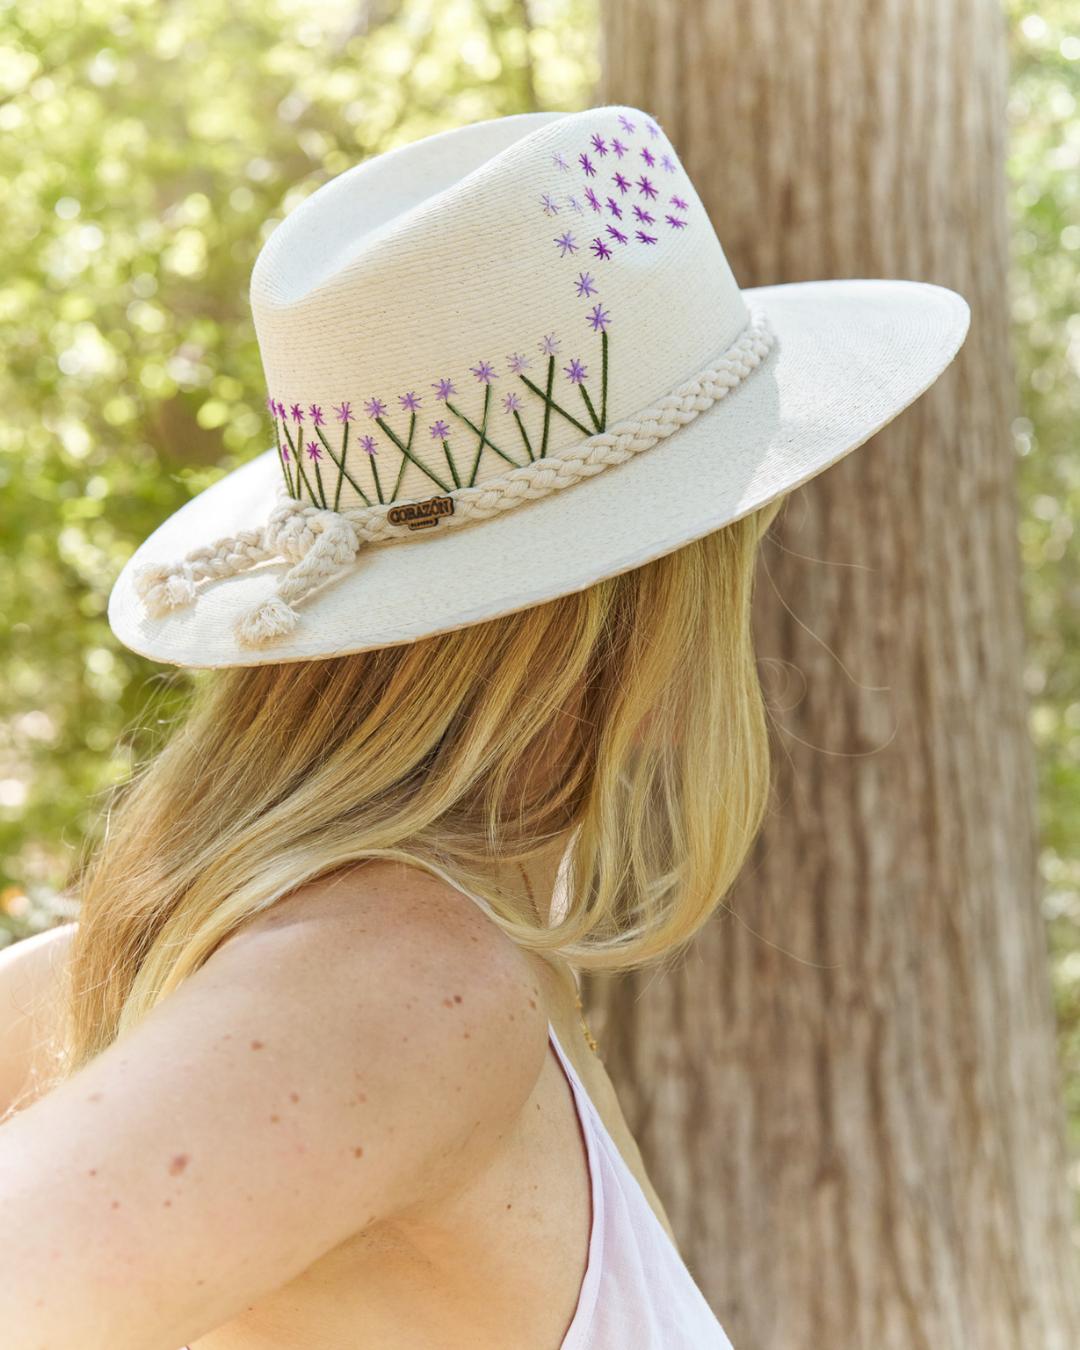 Exclusive Purple Stella Hat by Corazon Playero - Preorder